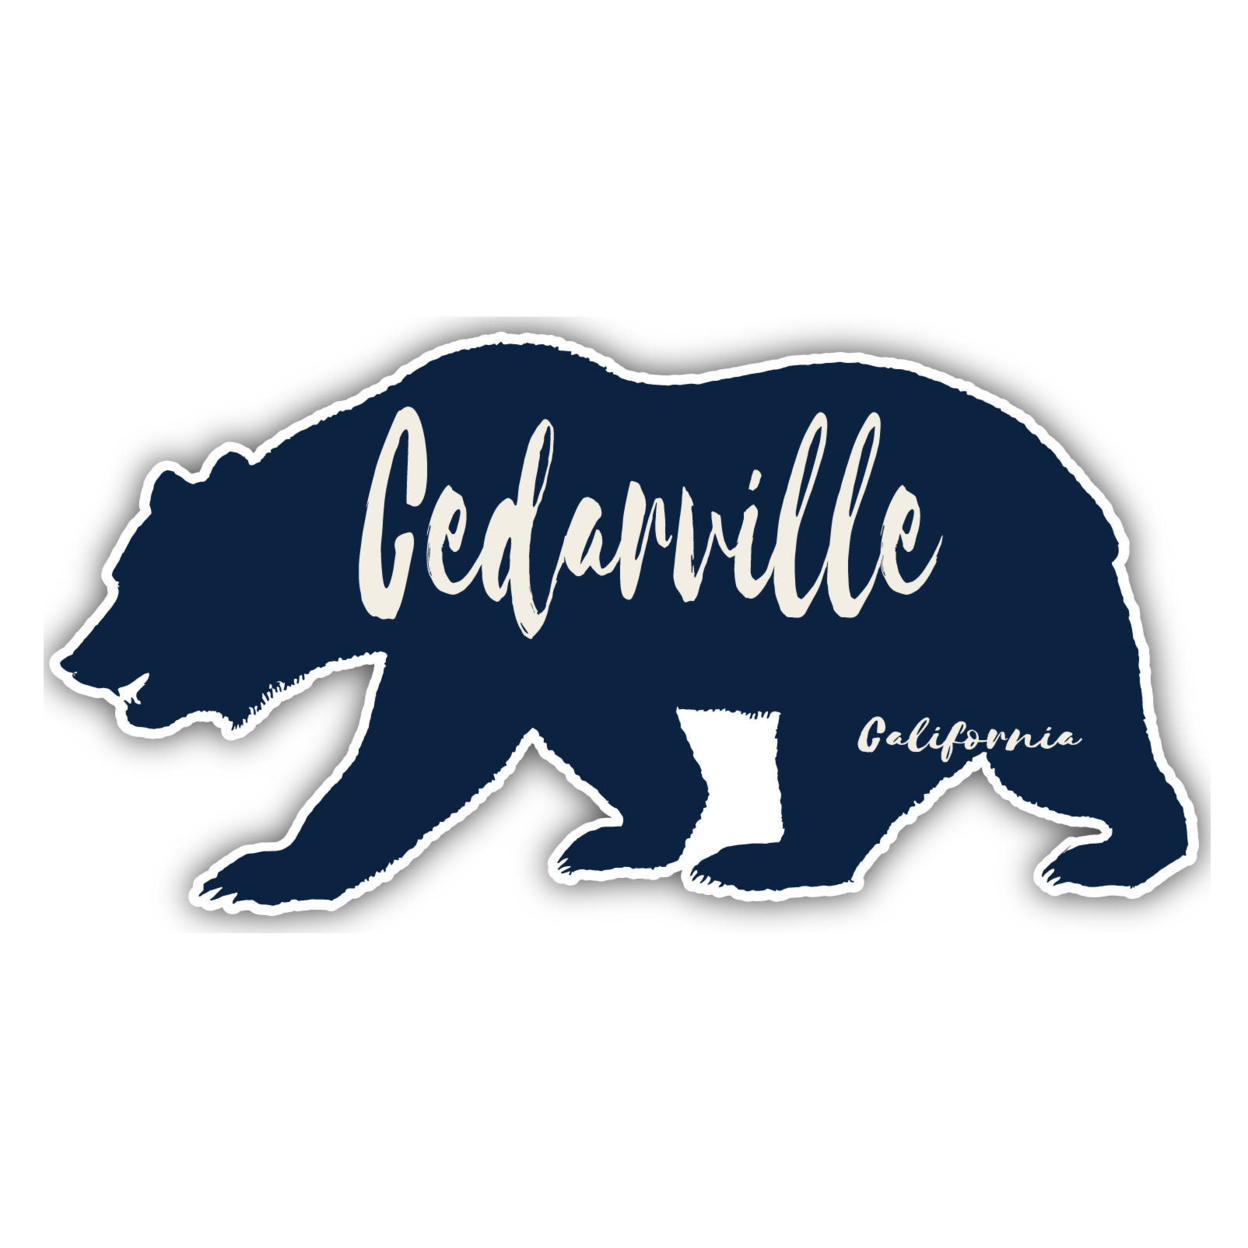 Cedarville California Souvenir Decorative Stickers (Choose Theme And Size) - Single Unit, 10-Inch, Bear